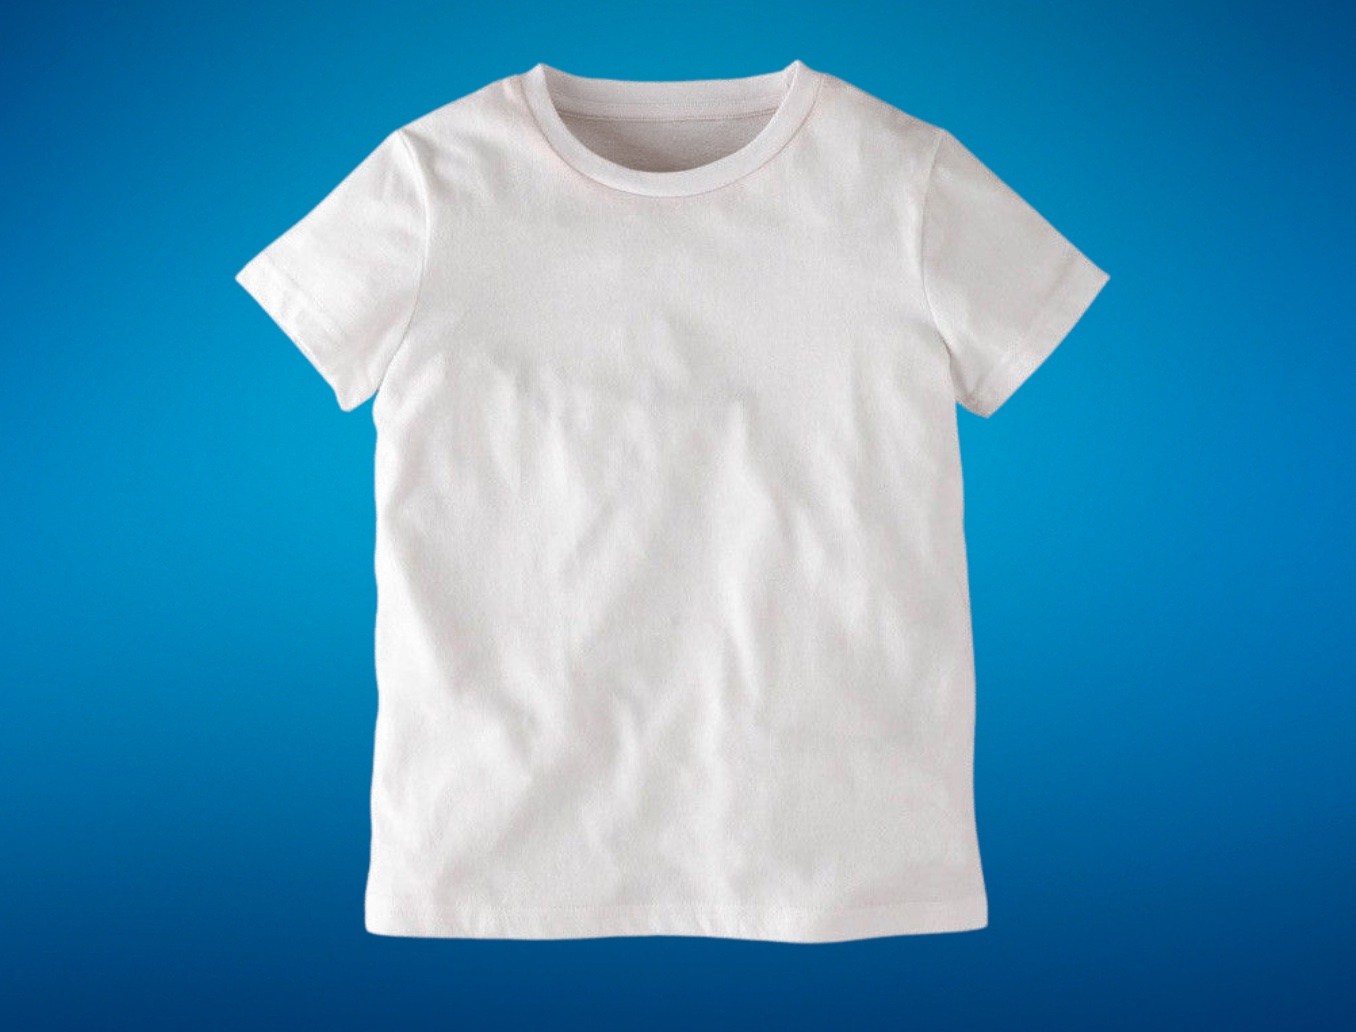 Camiseta Unisex manga corta infantil color blanco – SubliMarket